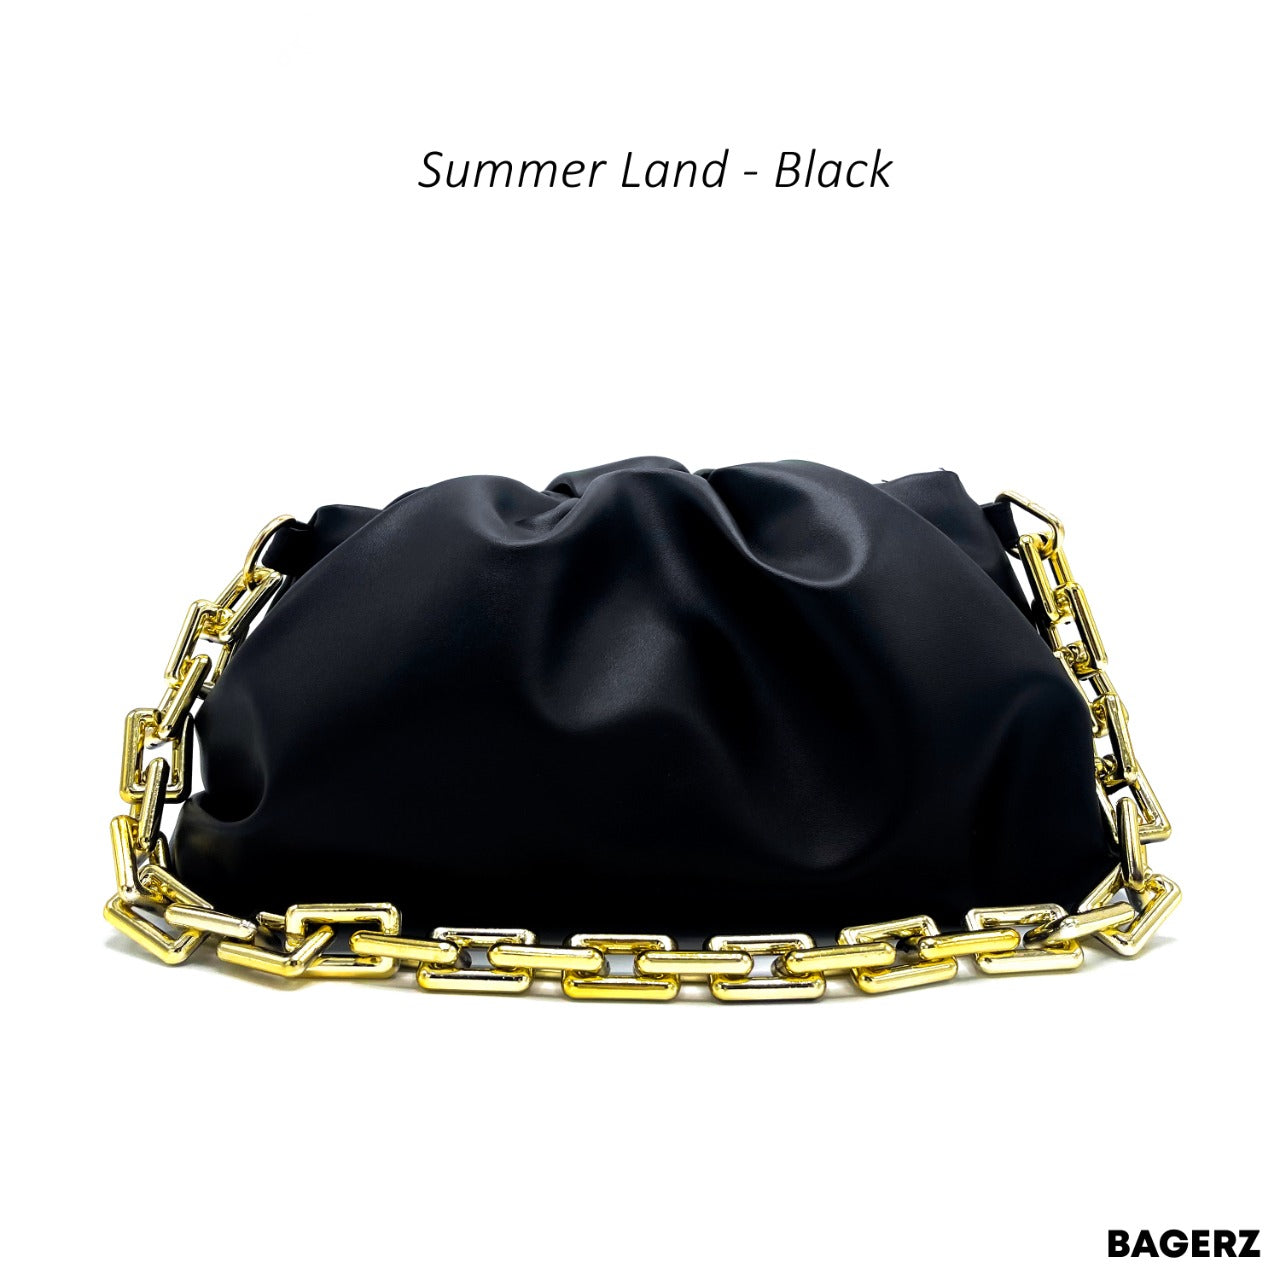 Summer Land - Black